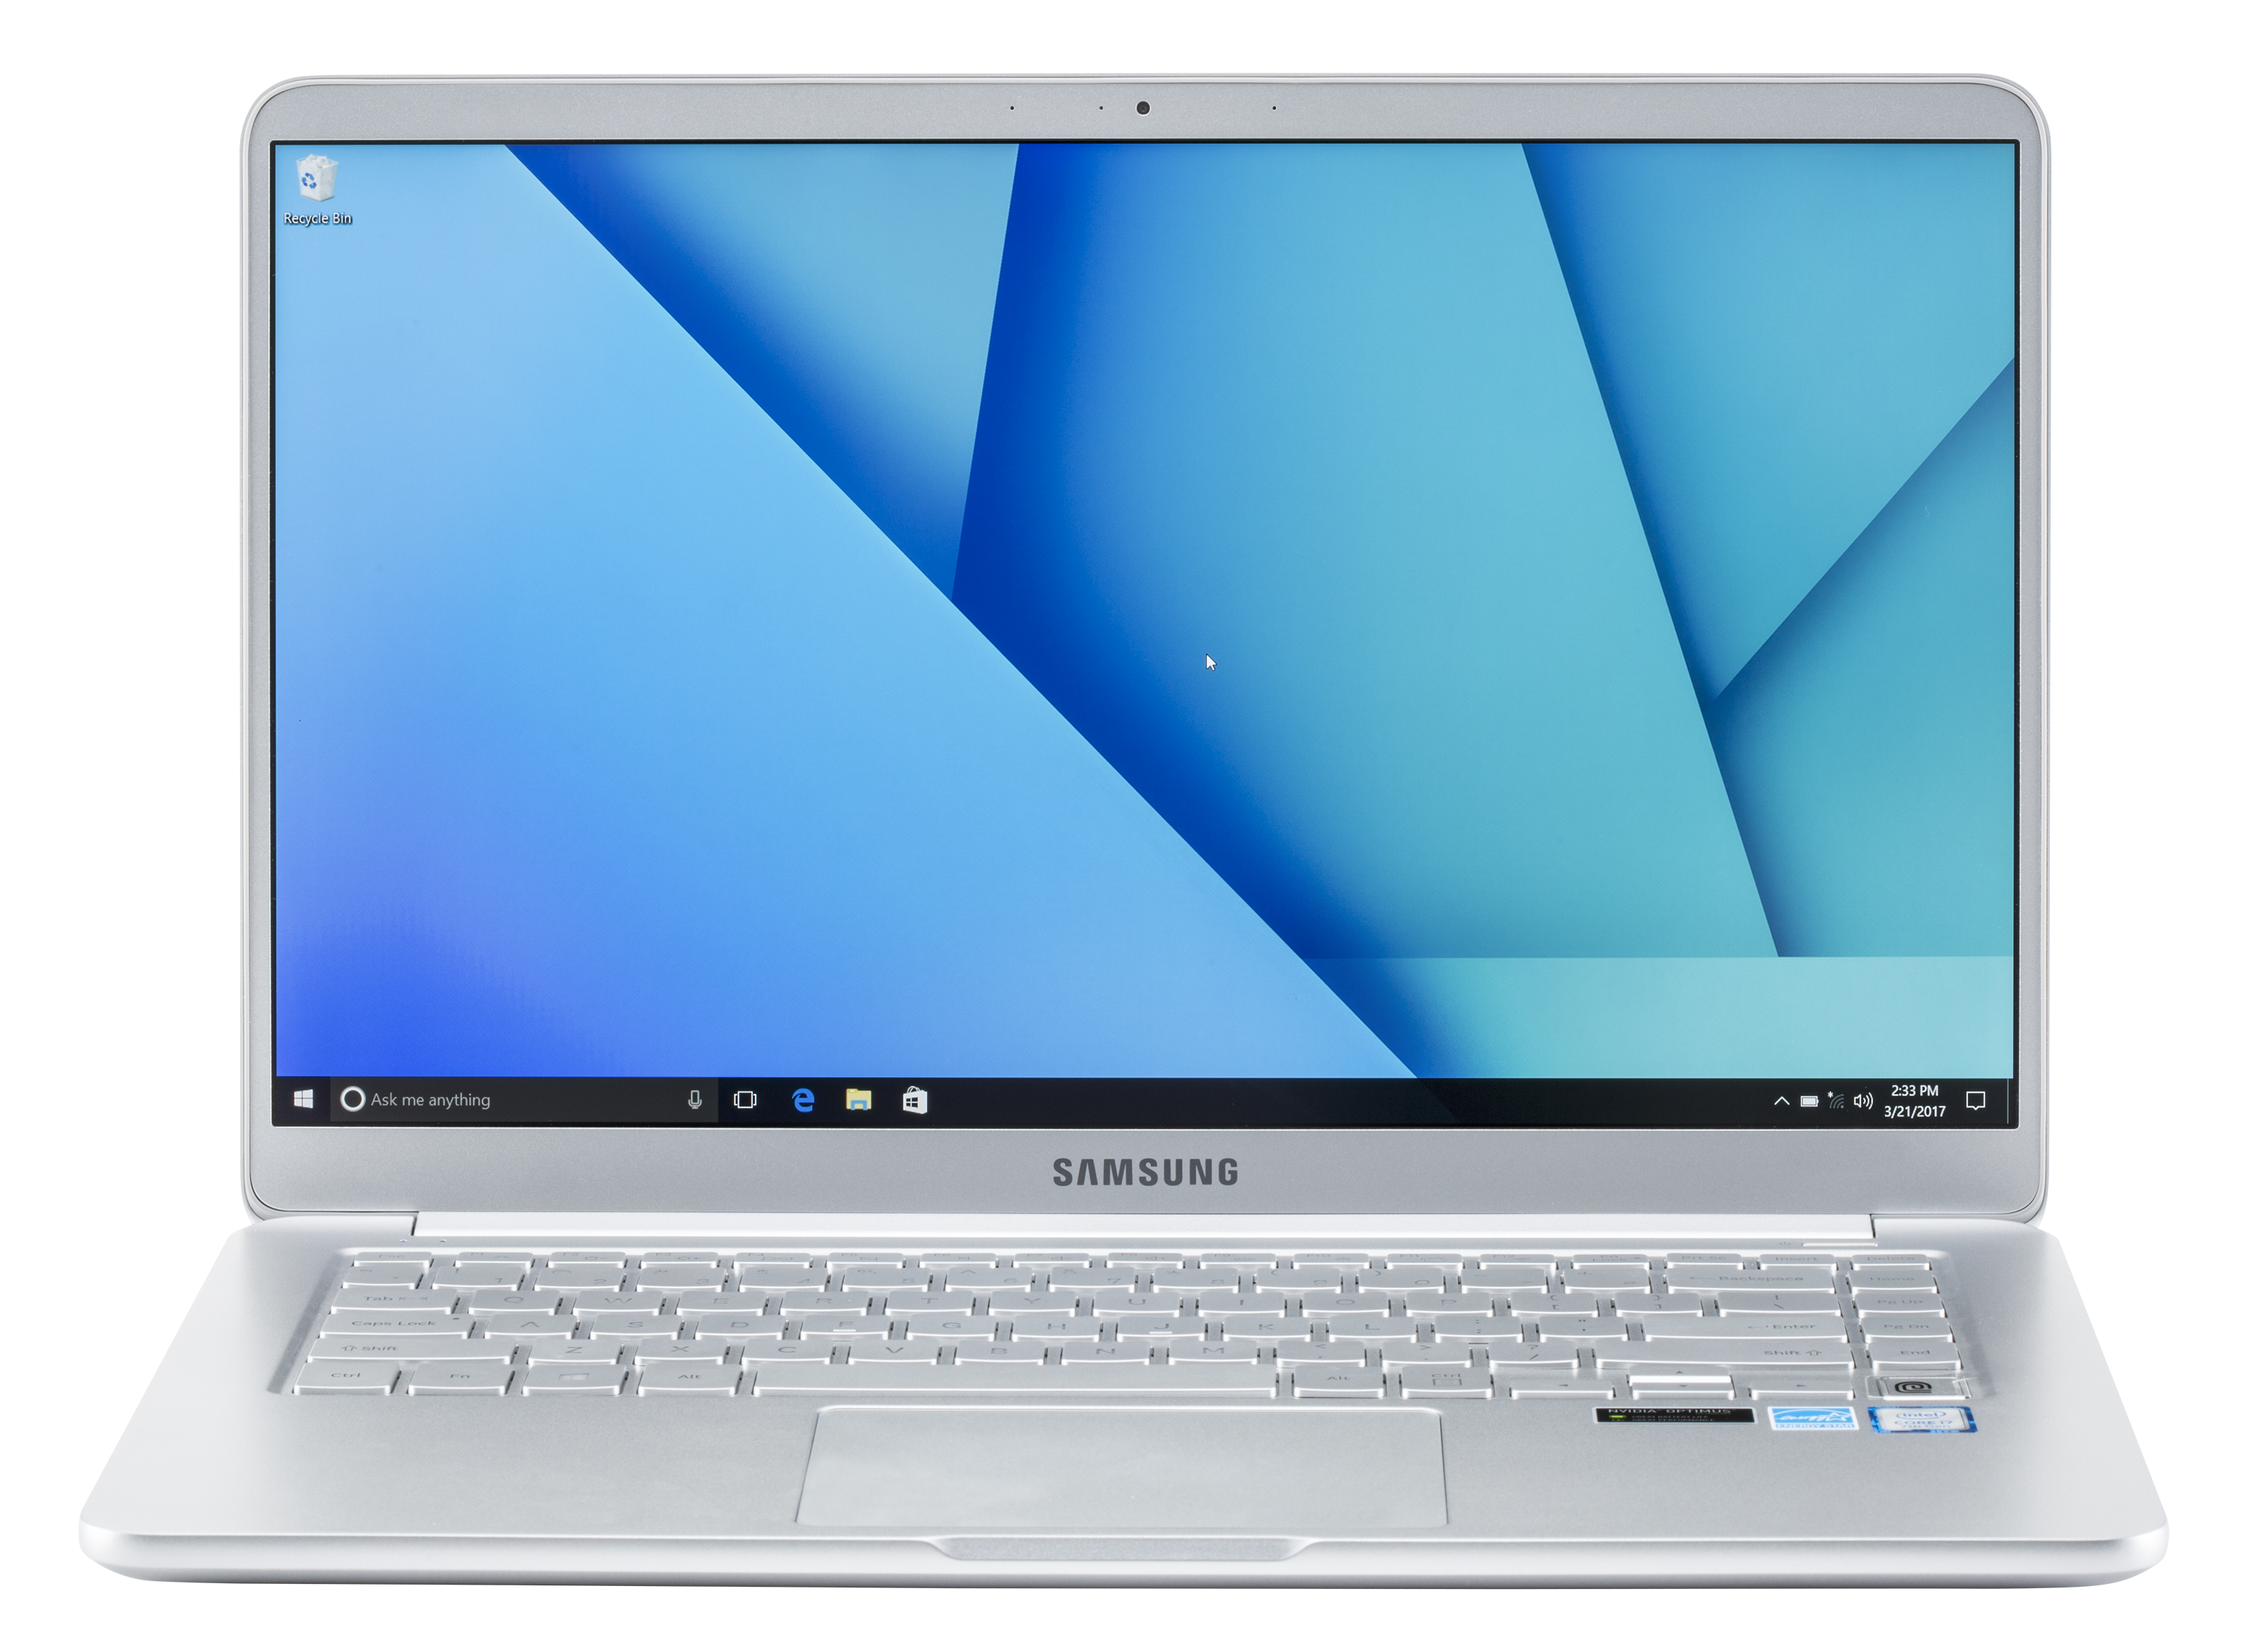 Ноутбук самсунг видит. Samsung Notebook. Ноутбук самсунг 2021. Ноутбук Samsung 740u5l. Ноутбук самсунг 2017.